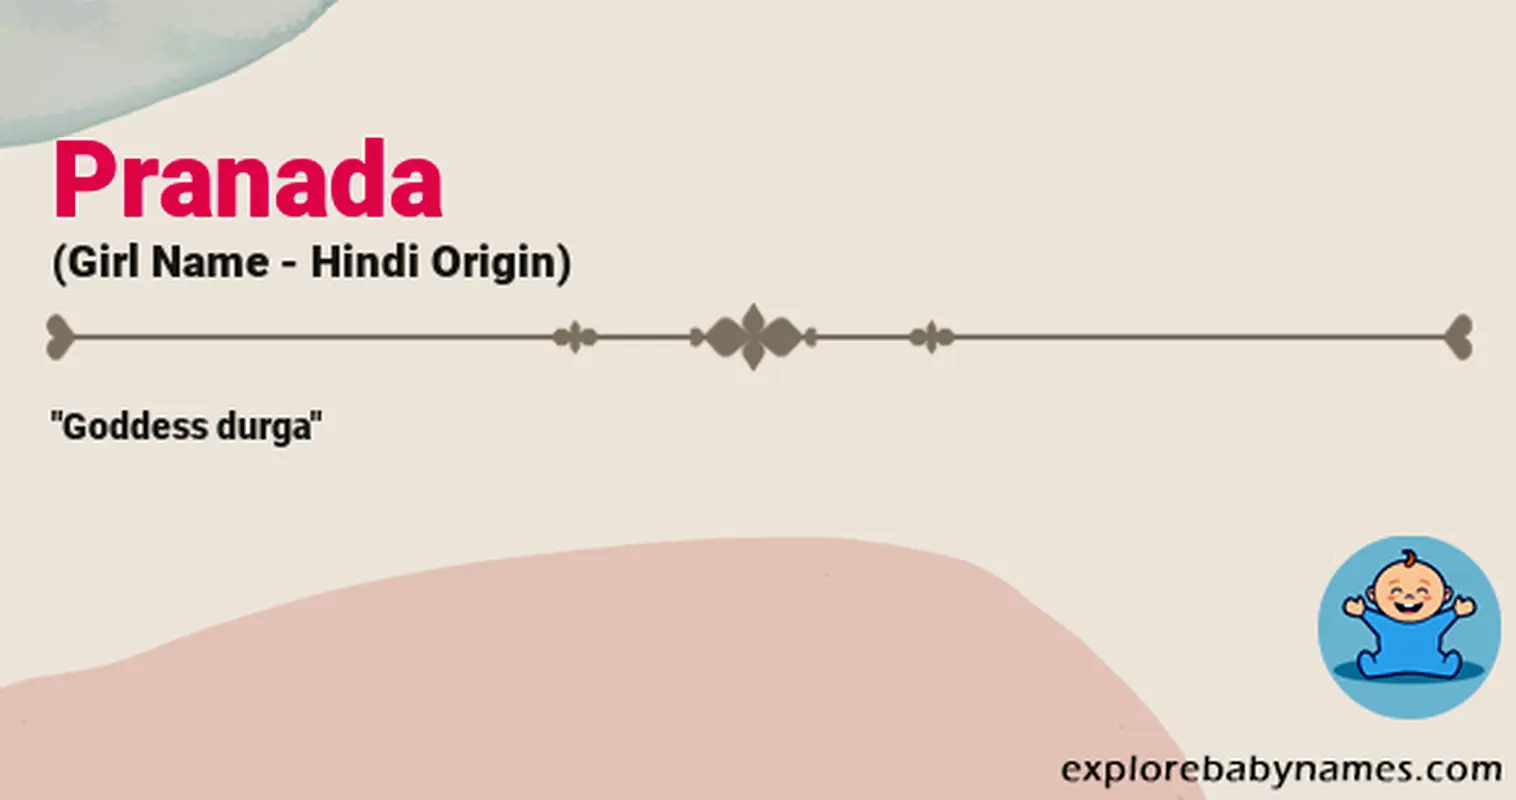 Meaning of Pranada